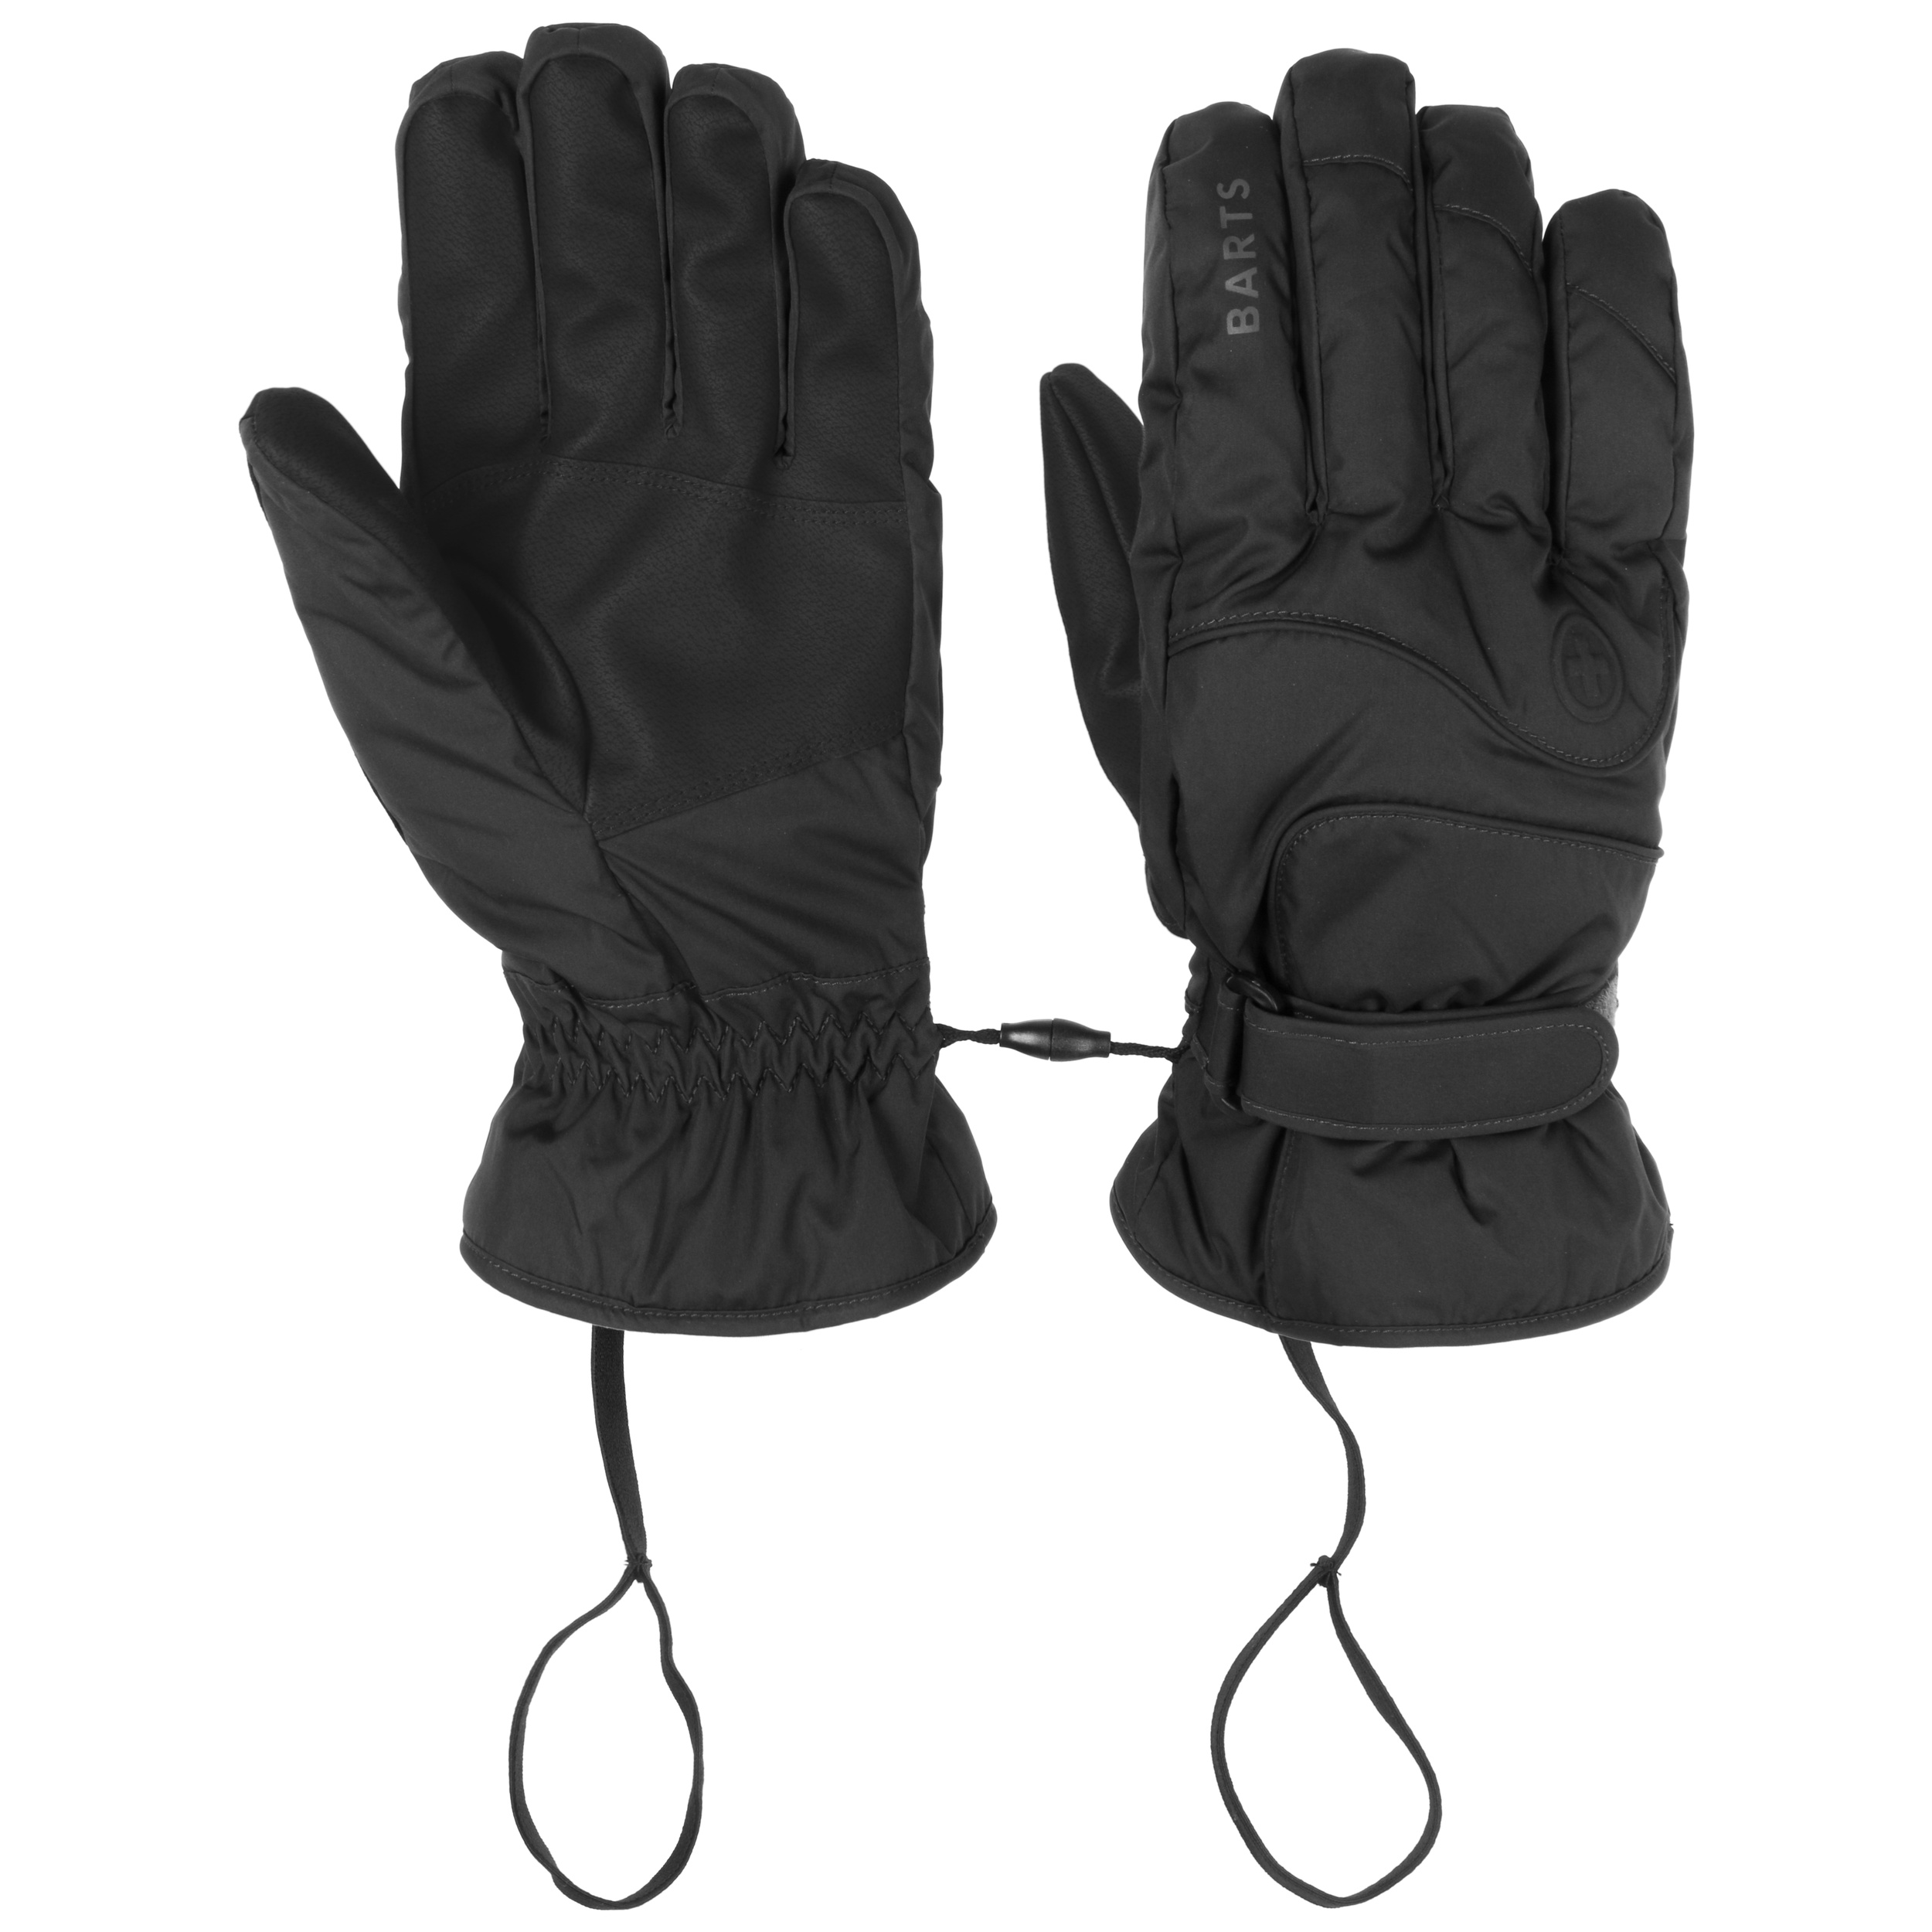 Gouverneur Junior ruimte Basic Ski Handschoenen by Barts - 34,99 €